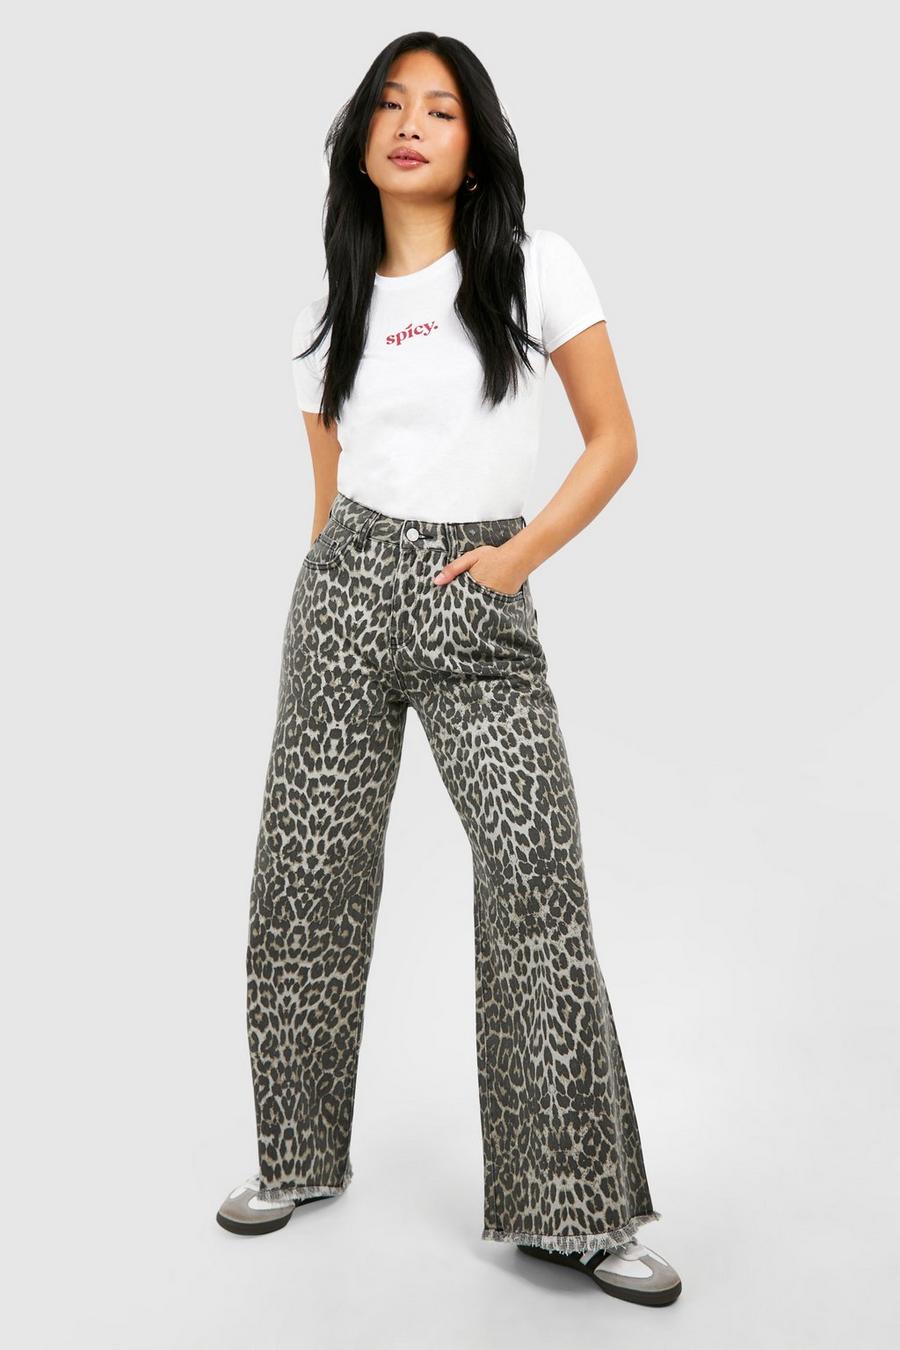 Petite Leopardenprint Jeans mit geradem Bein, Leopard